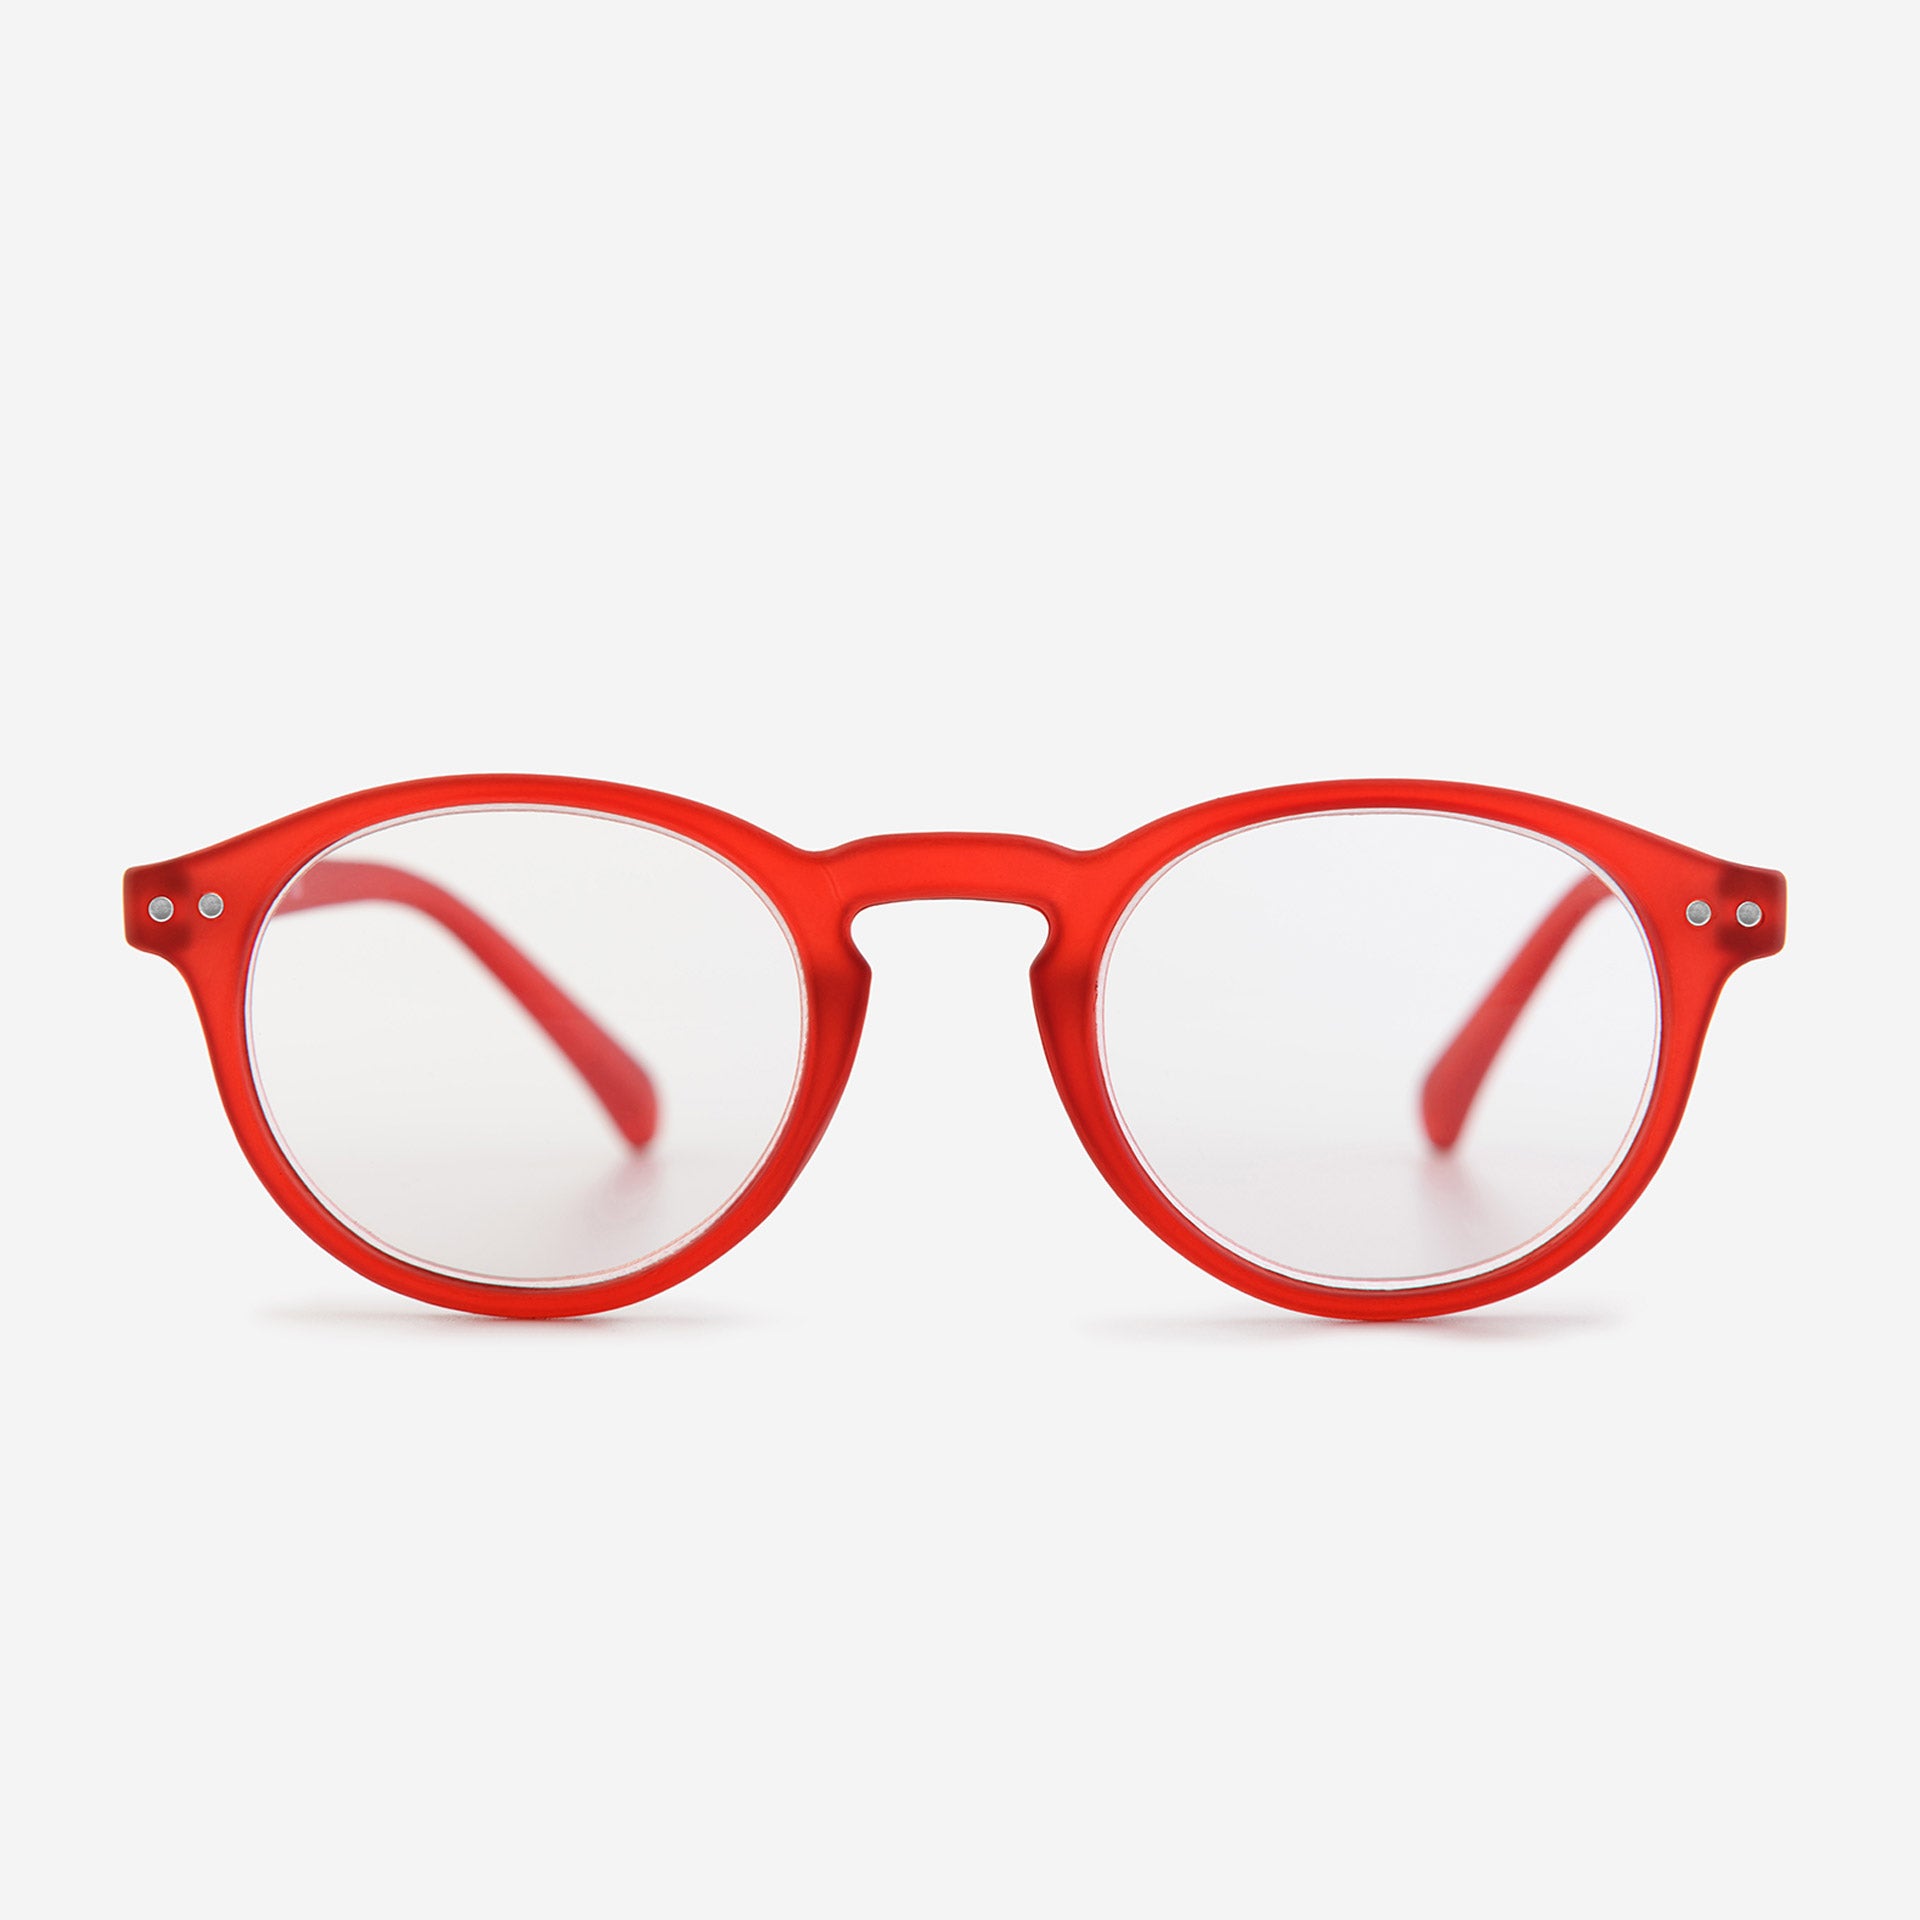 Red pantos reading glasses